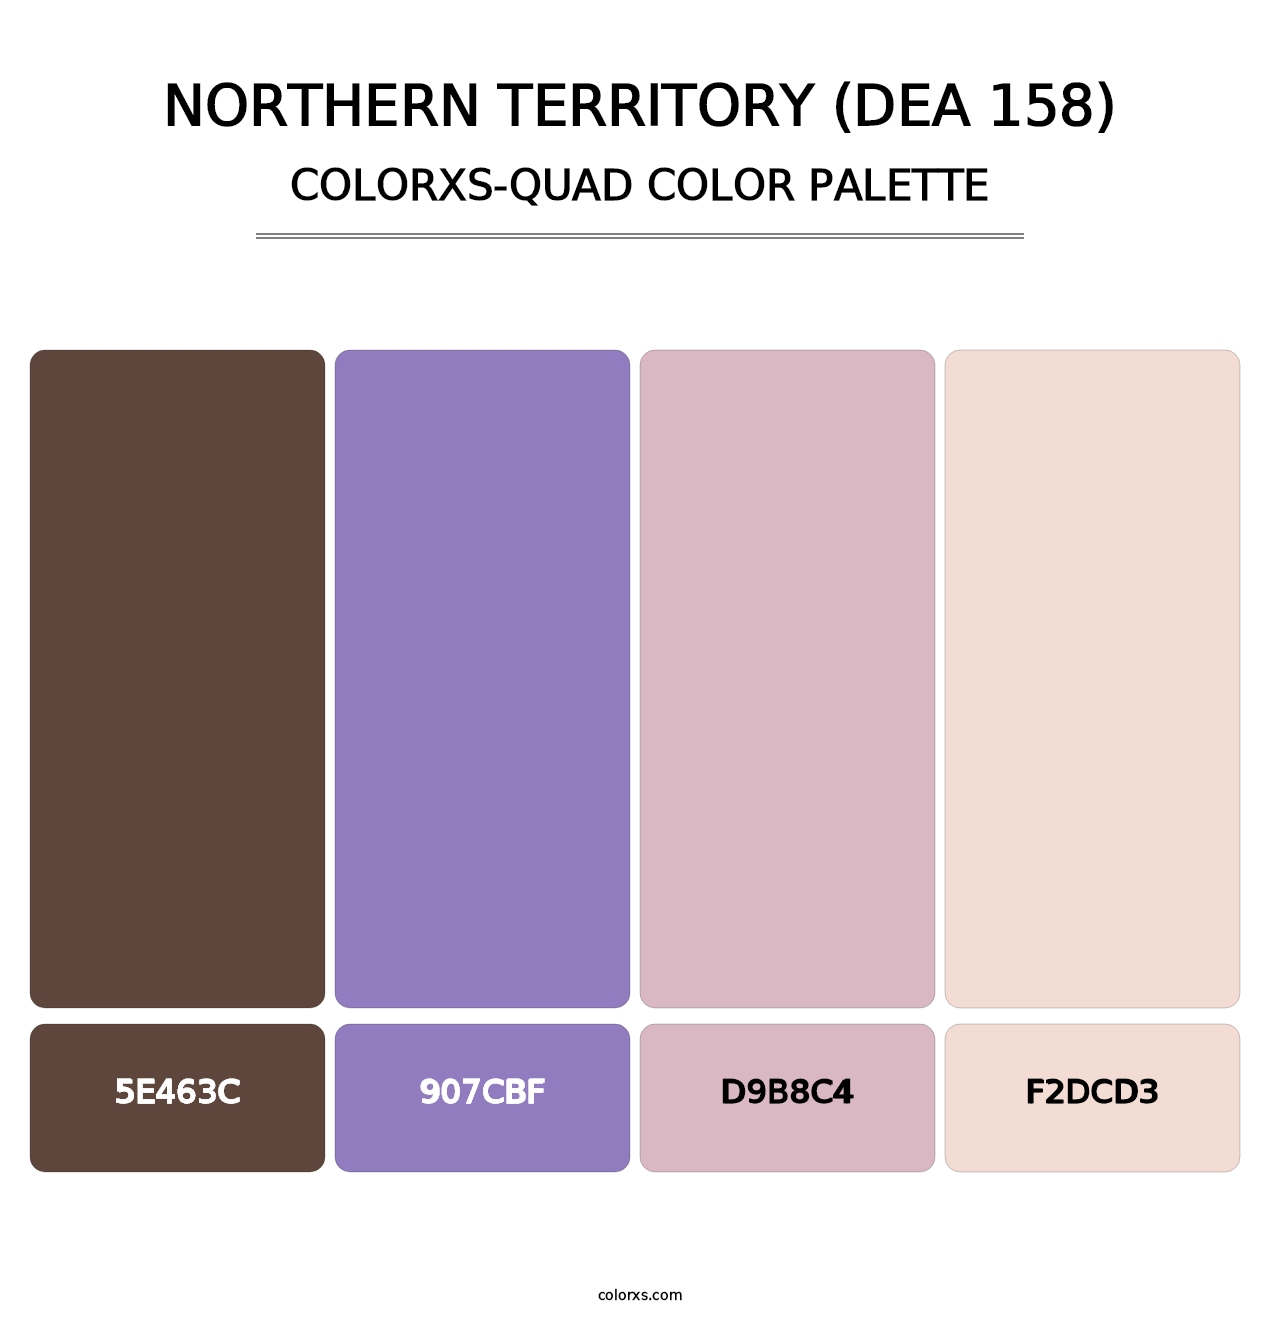 Northern Territory (DEA 158) - Colorxs Quad Palette